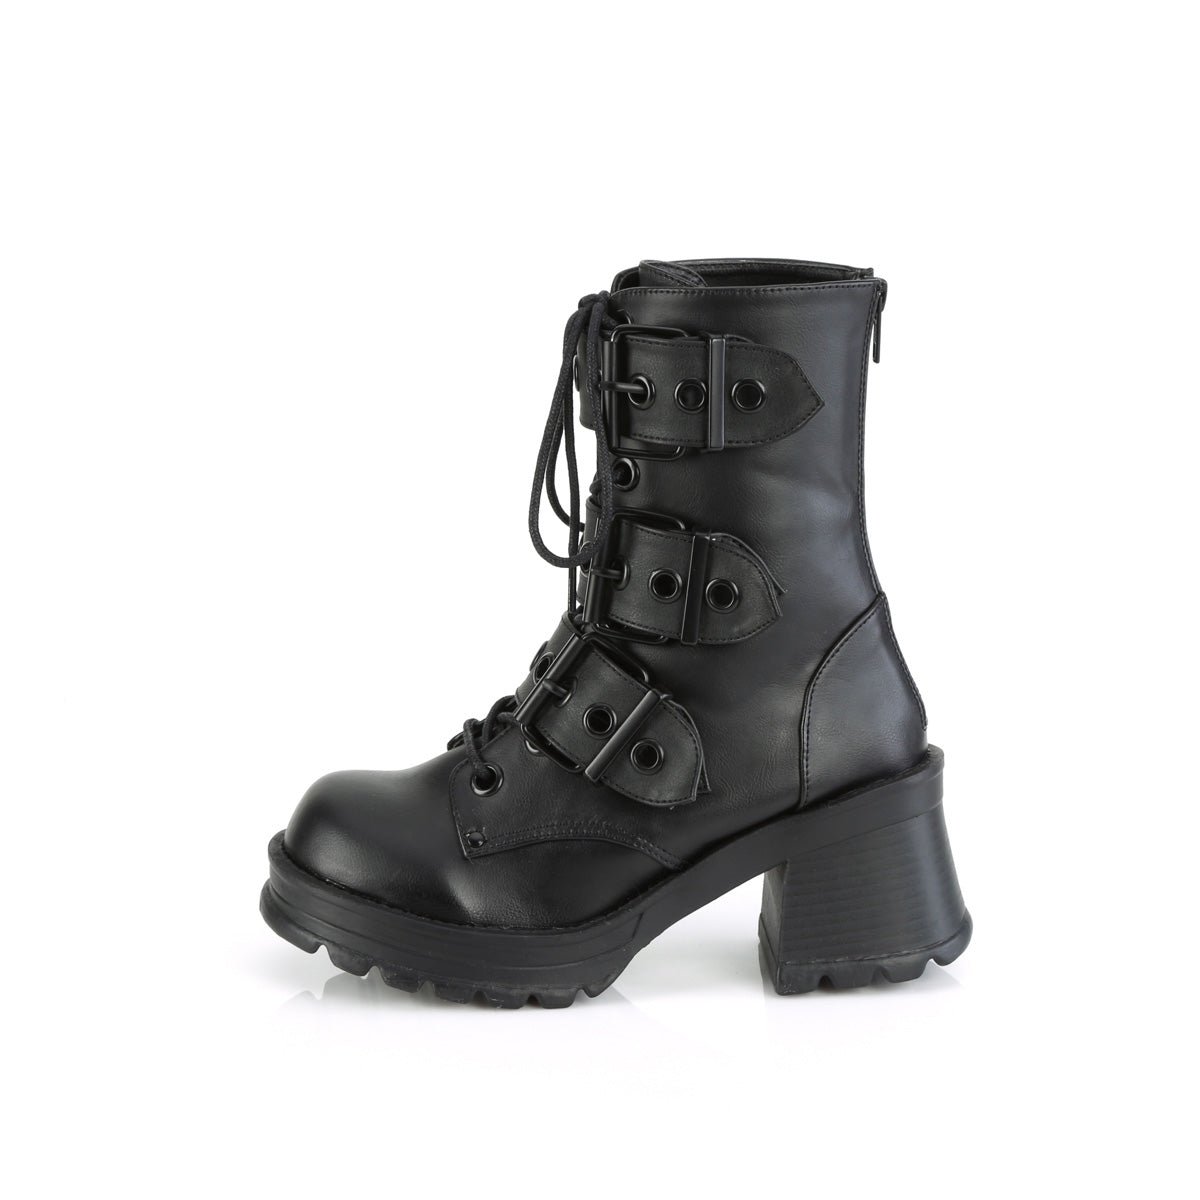 BRATTY-118 Demonia Black Vegan Leather Women's Ankle Boots [Demonia Cult Alternative Footwear]